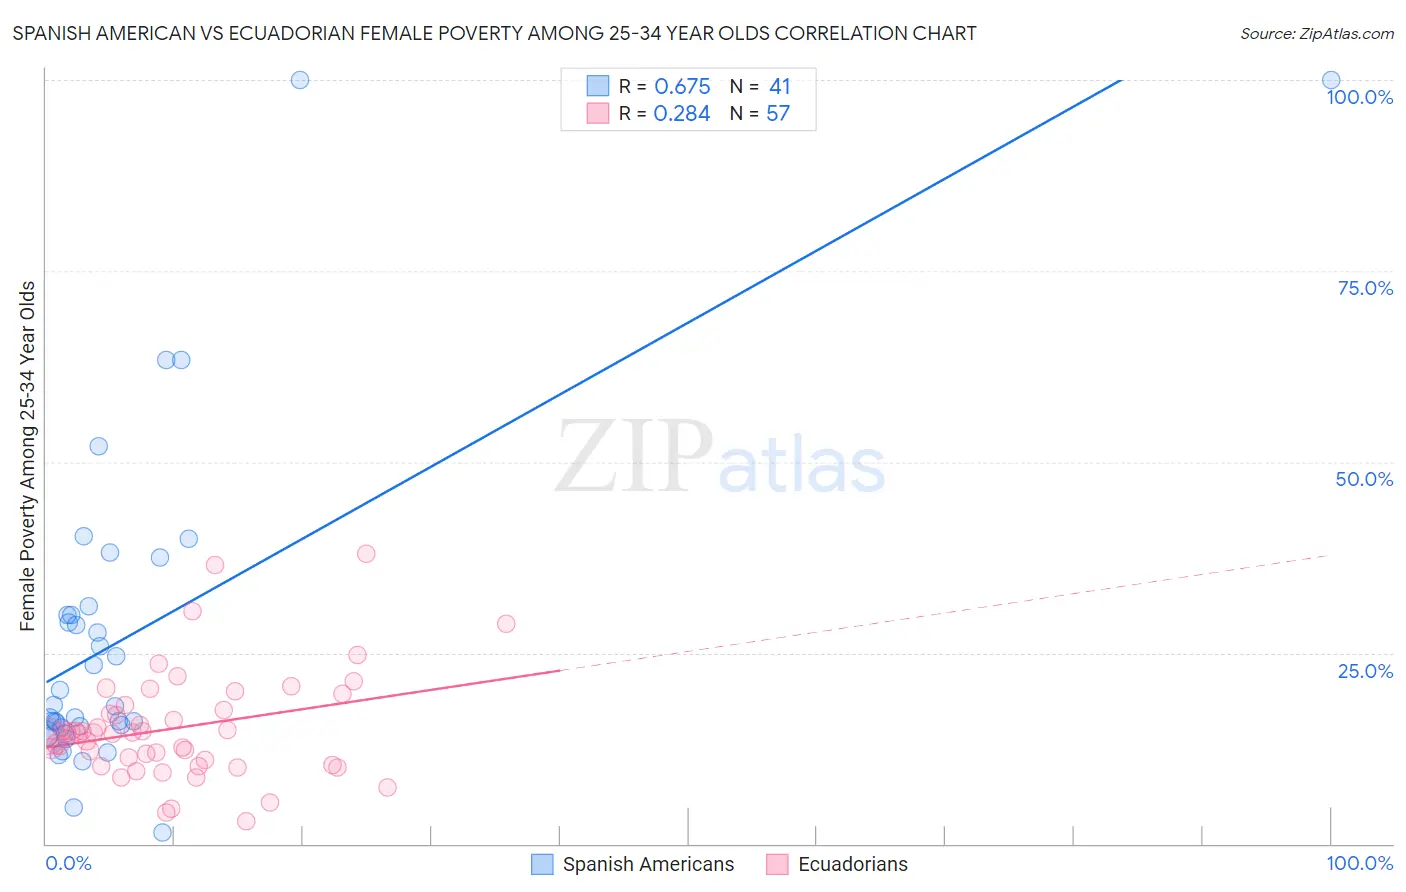 Spanish American vs Ecuadorian Female Poverty Among 25-34 Year Olds